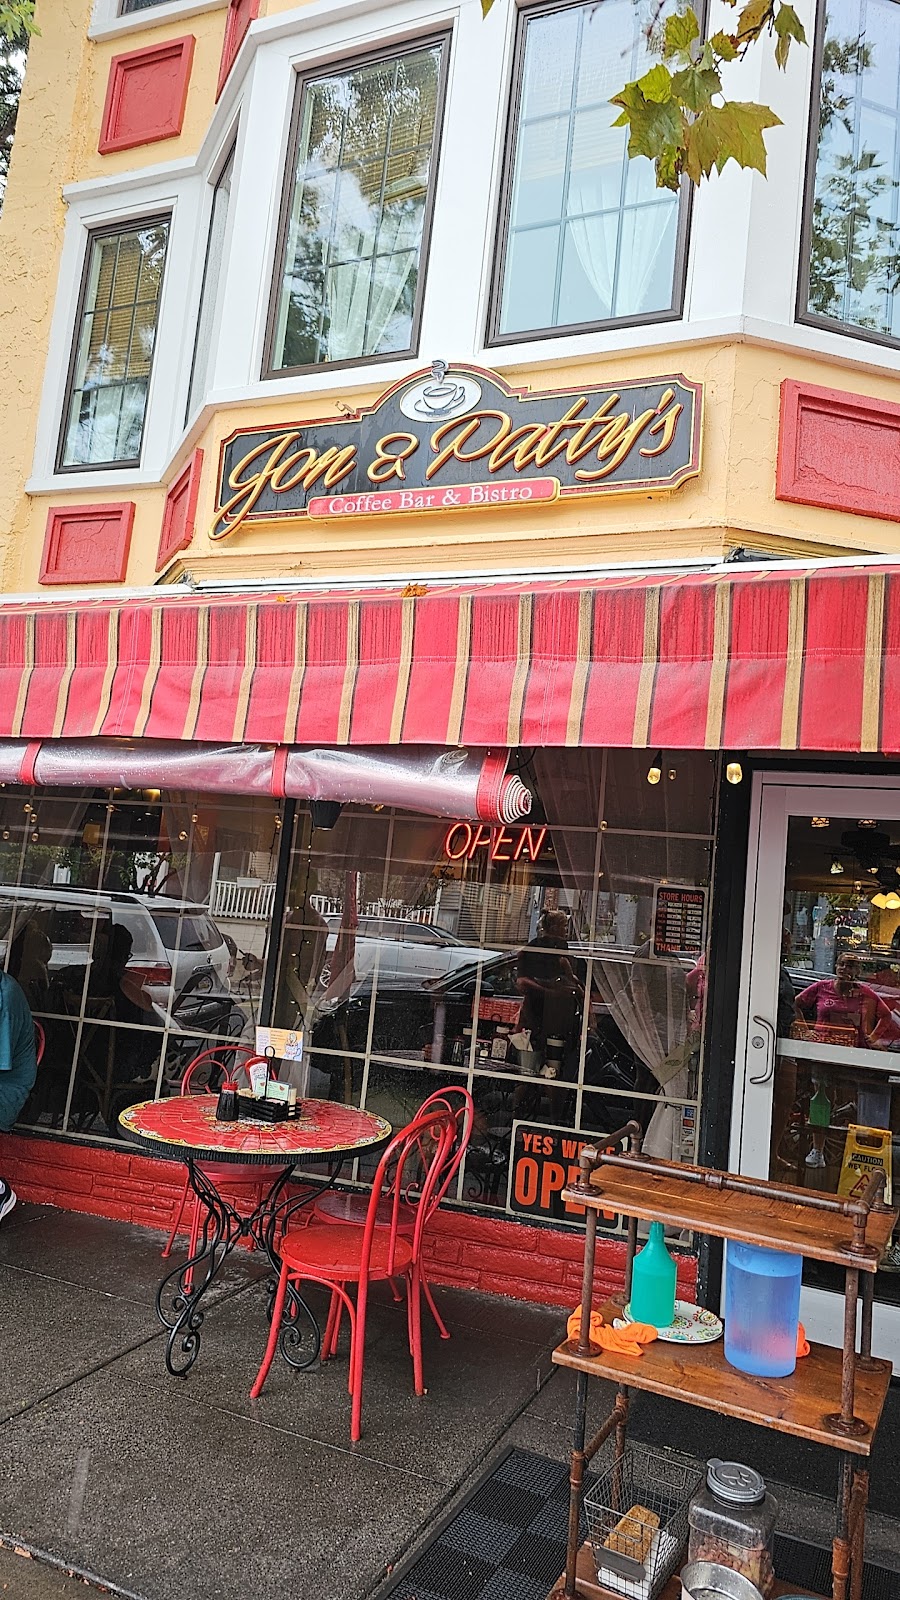 Jon & Pattys Coffee Bar & Bistro | 637 Asbury Ave, Ocean City, NJ 08226 | Phone: (609) 399-3377